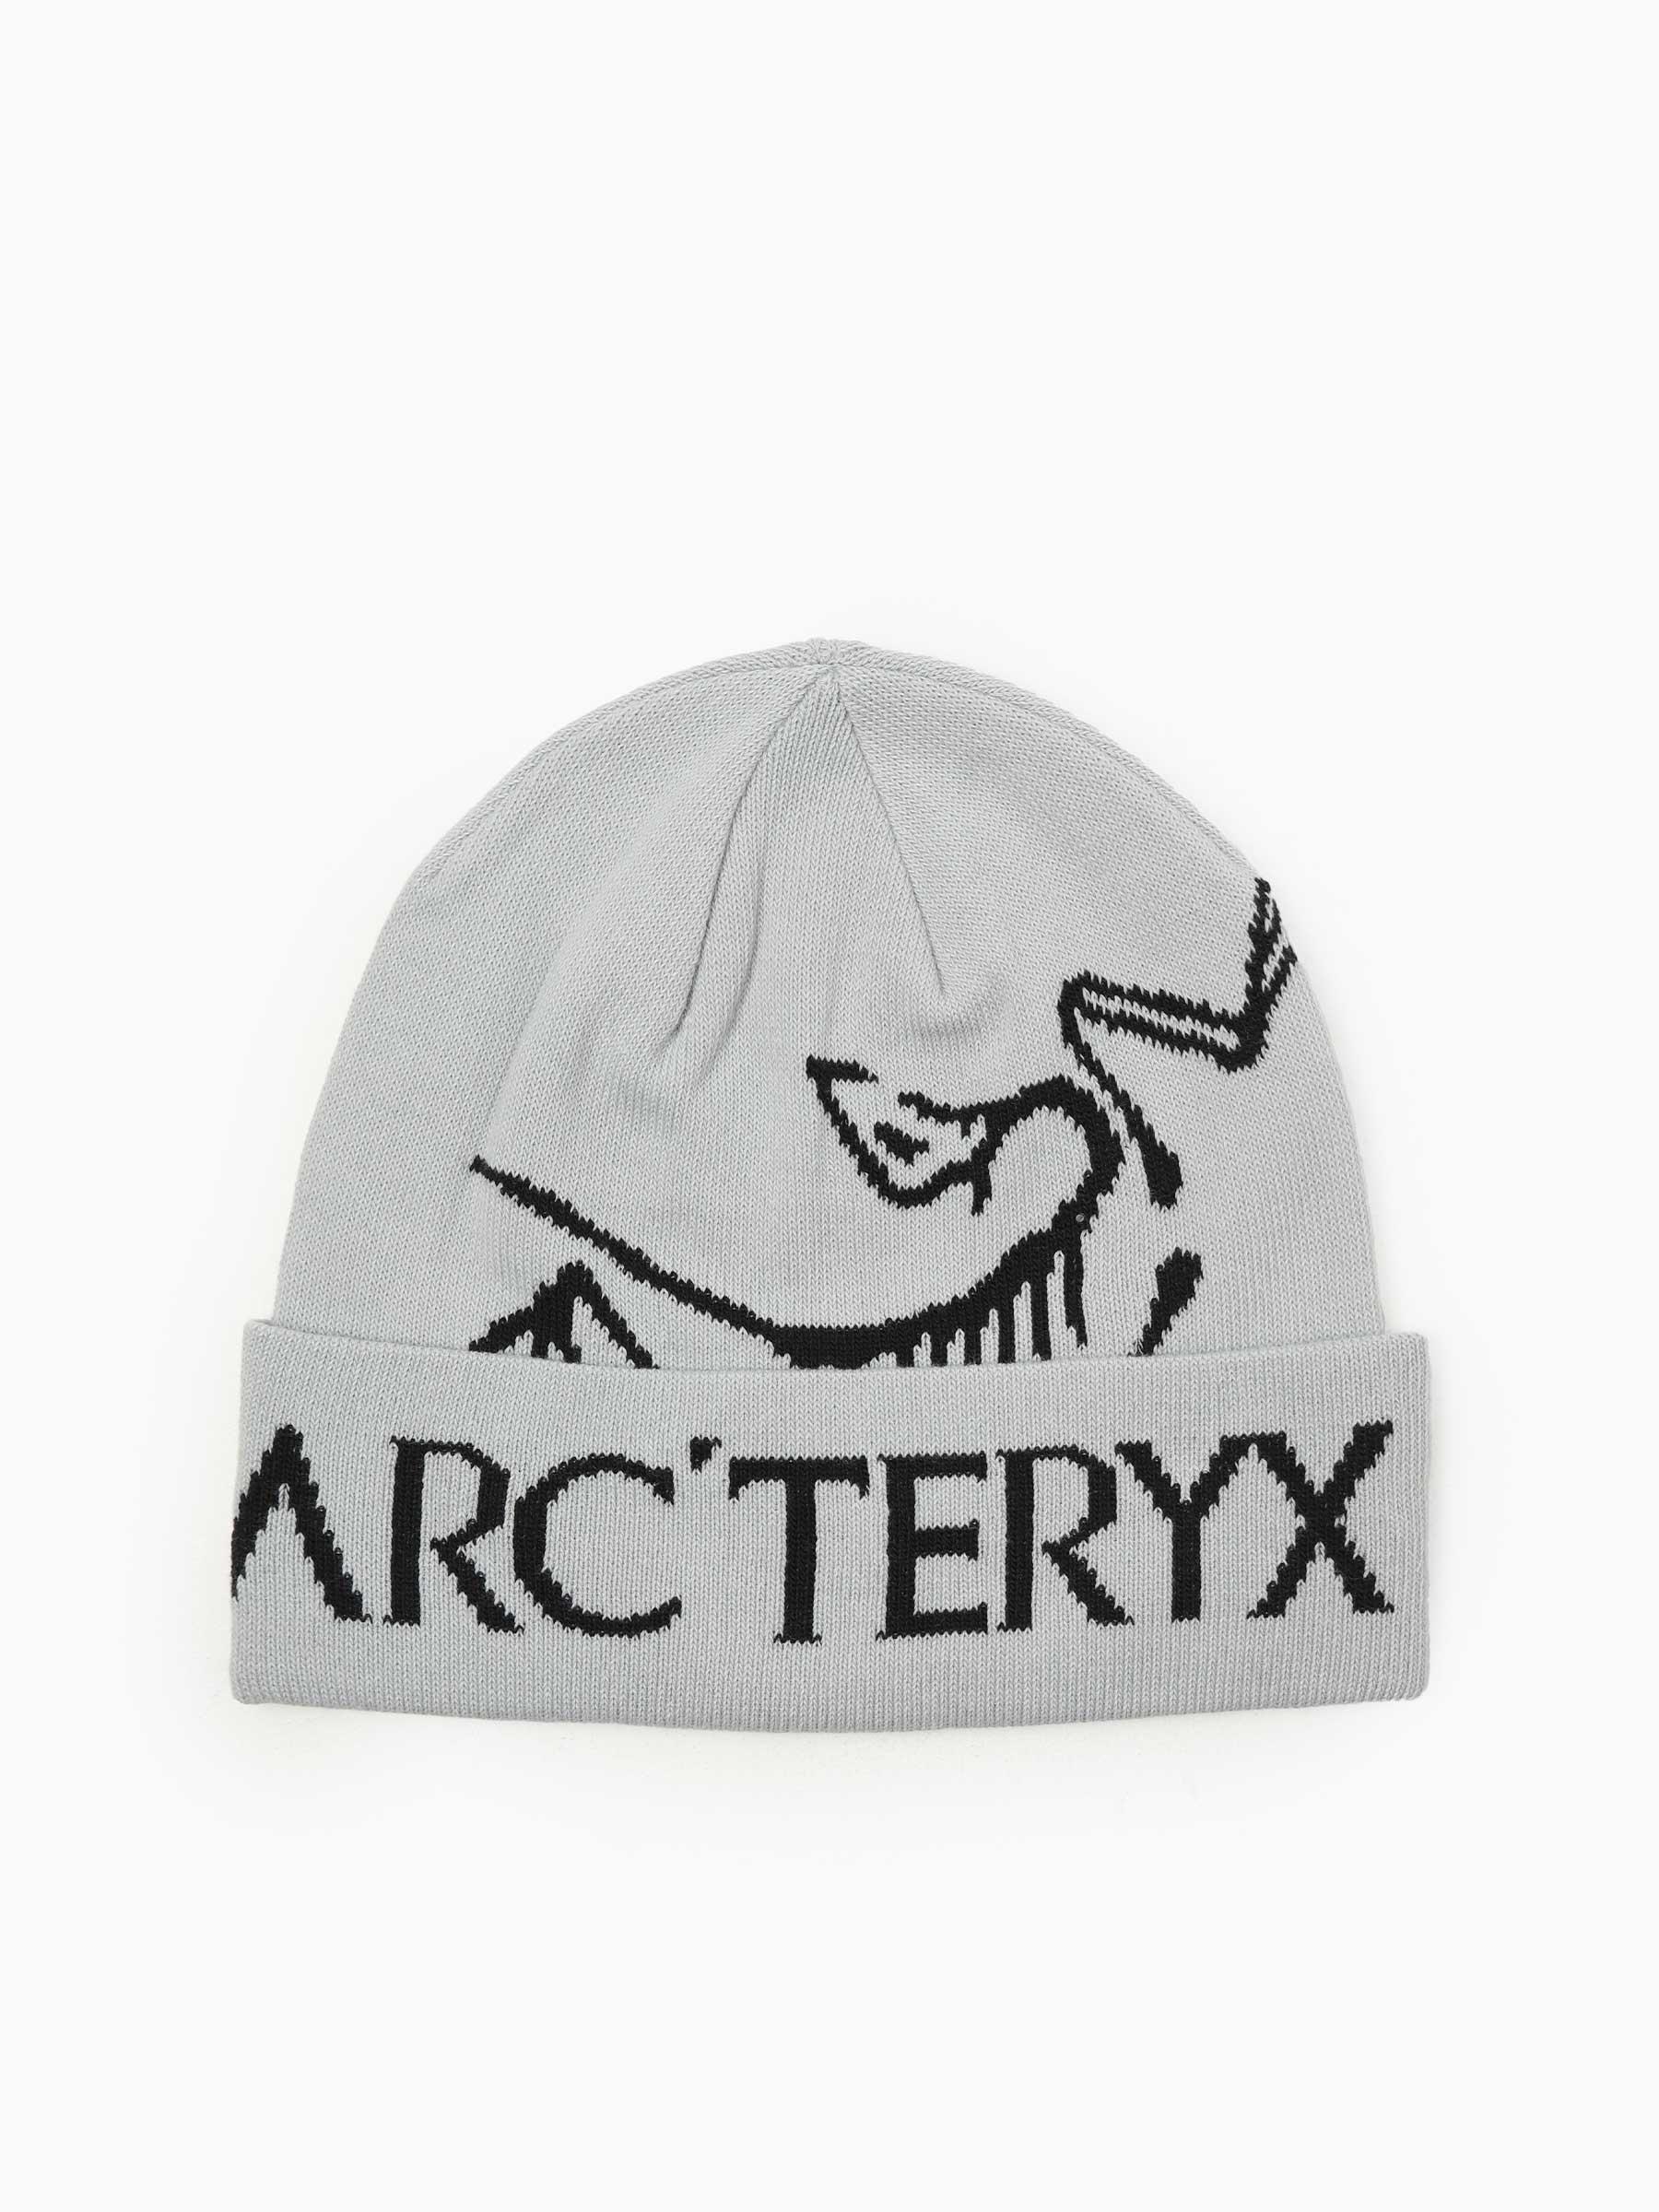 Arc'teryx Bird Word Toque Orca - Freshcotton